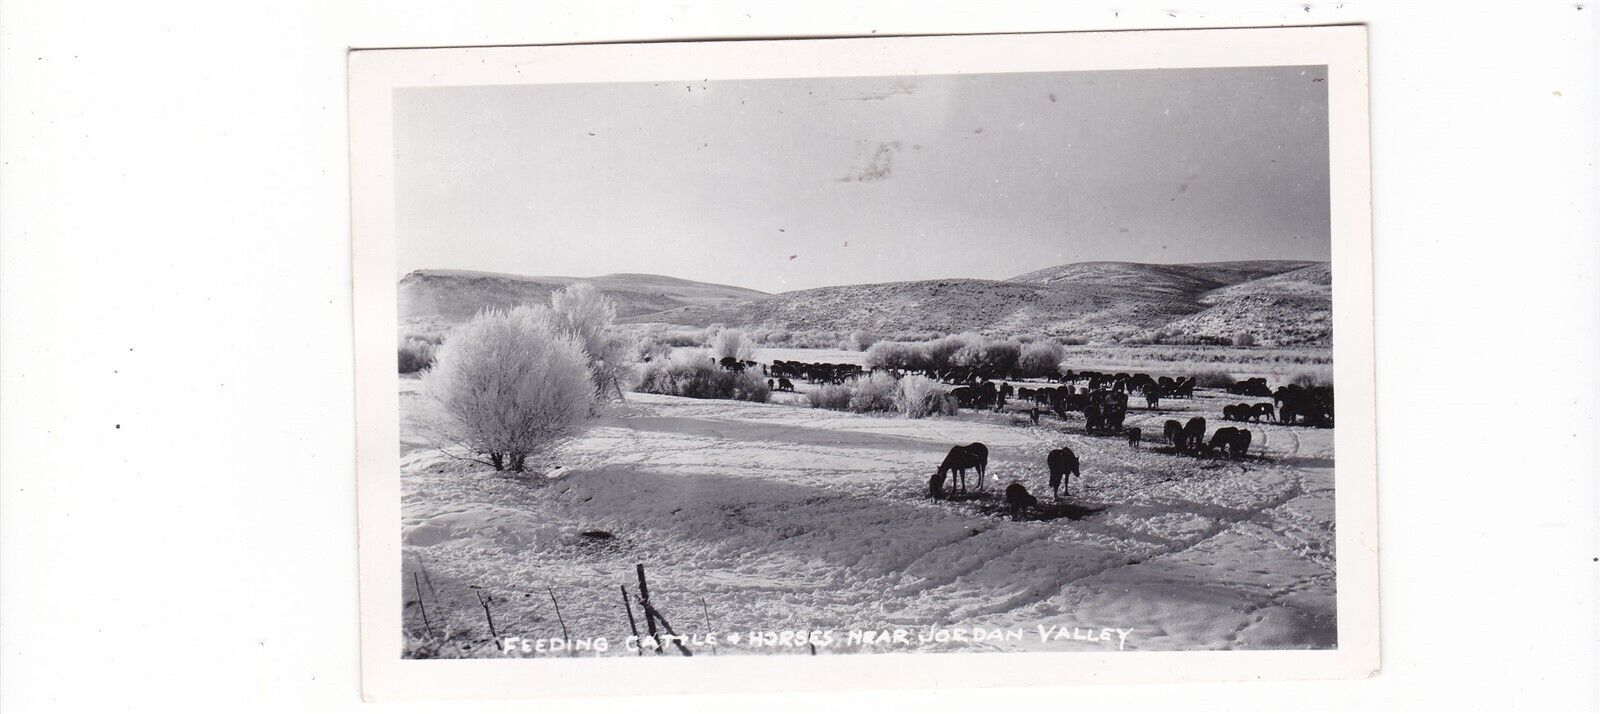 Feeding Cattle & Horses near Jordan Valley / real photo postcard 